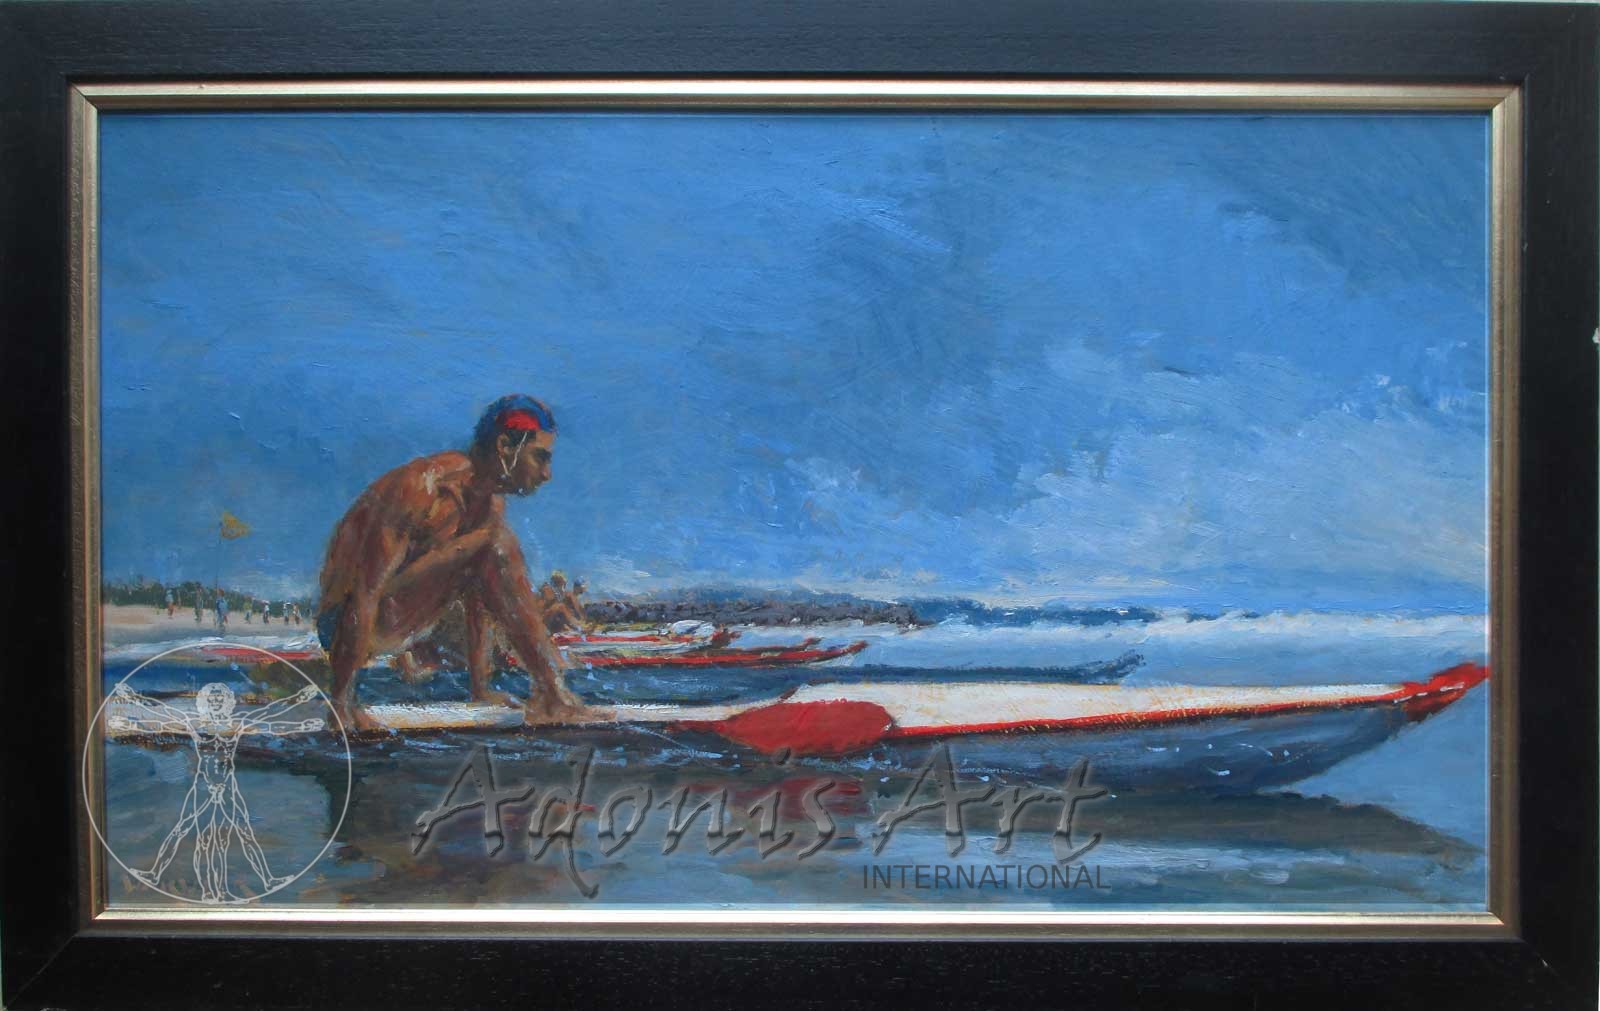 'Surf Ski Race' by Warwick Beecham